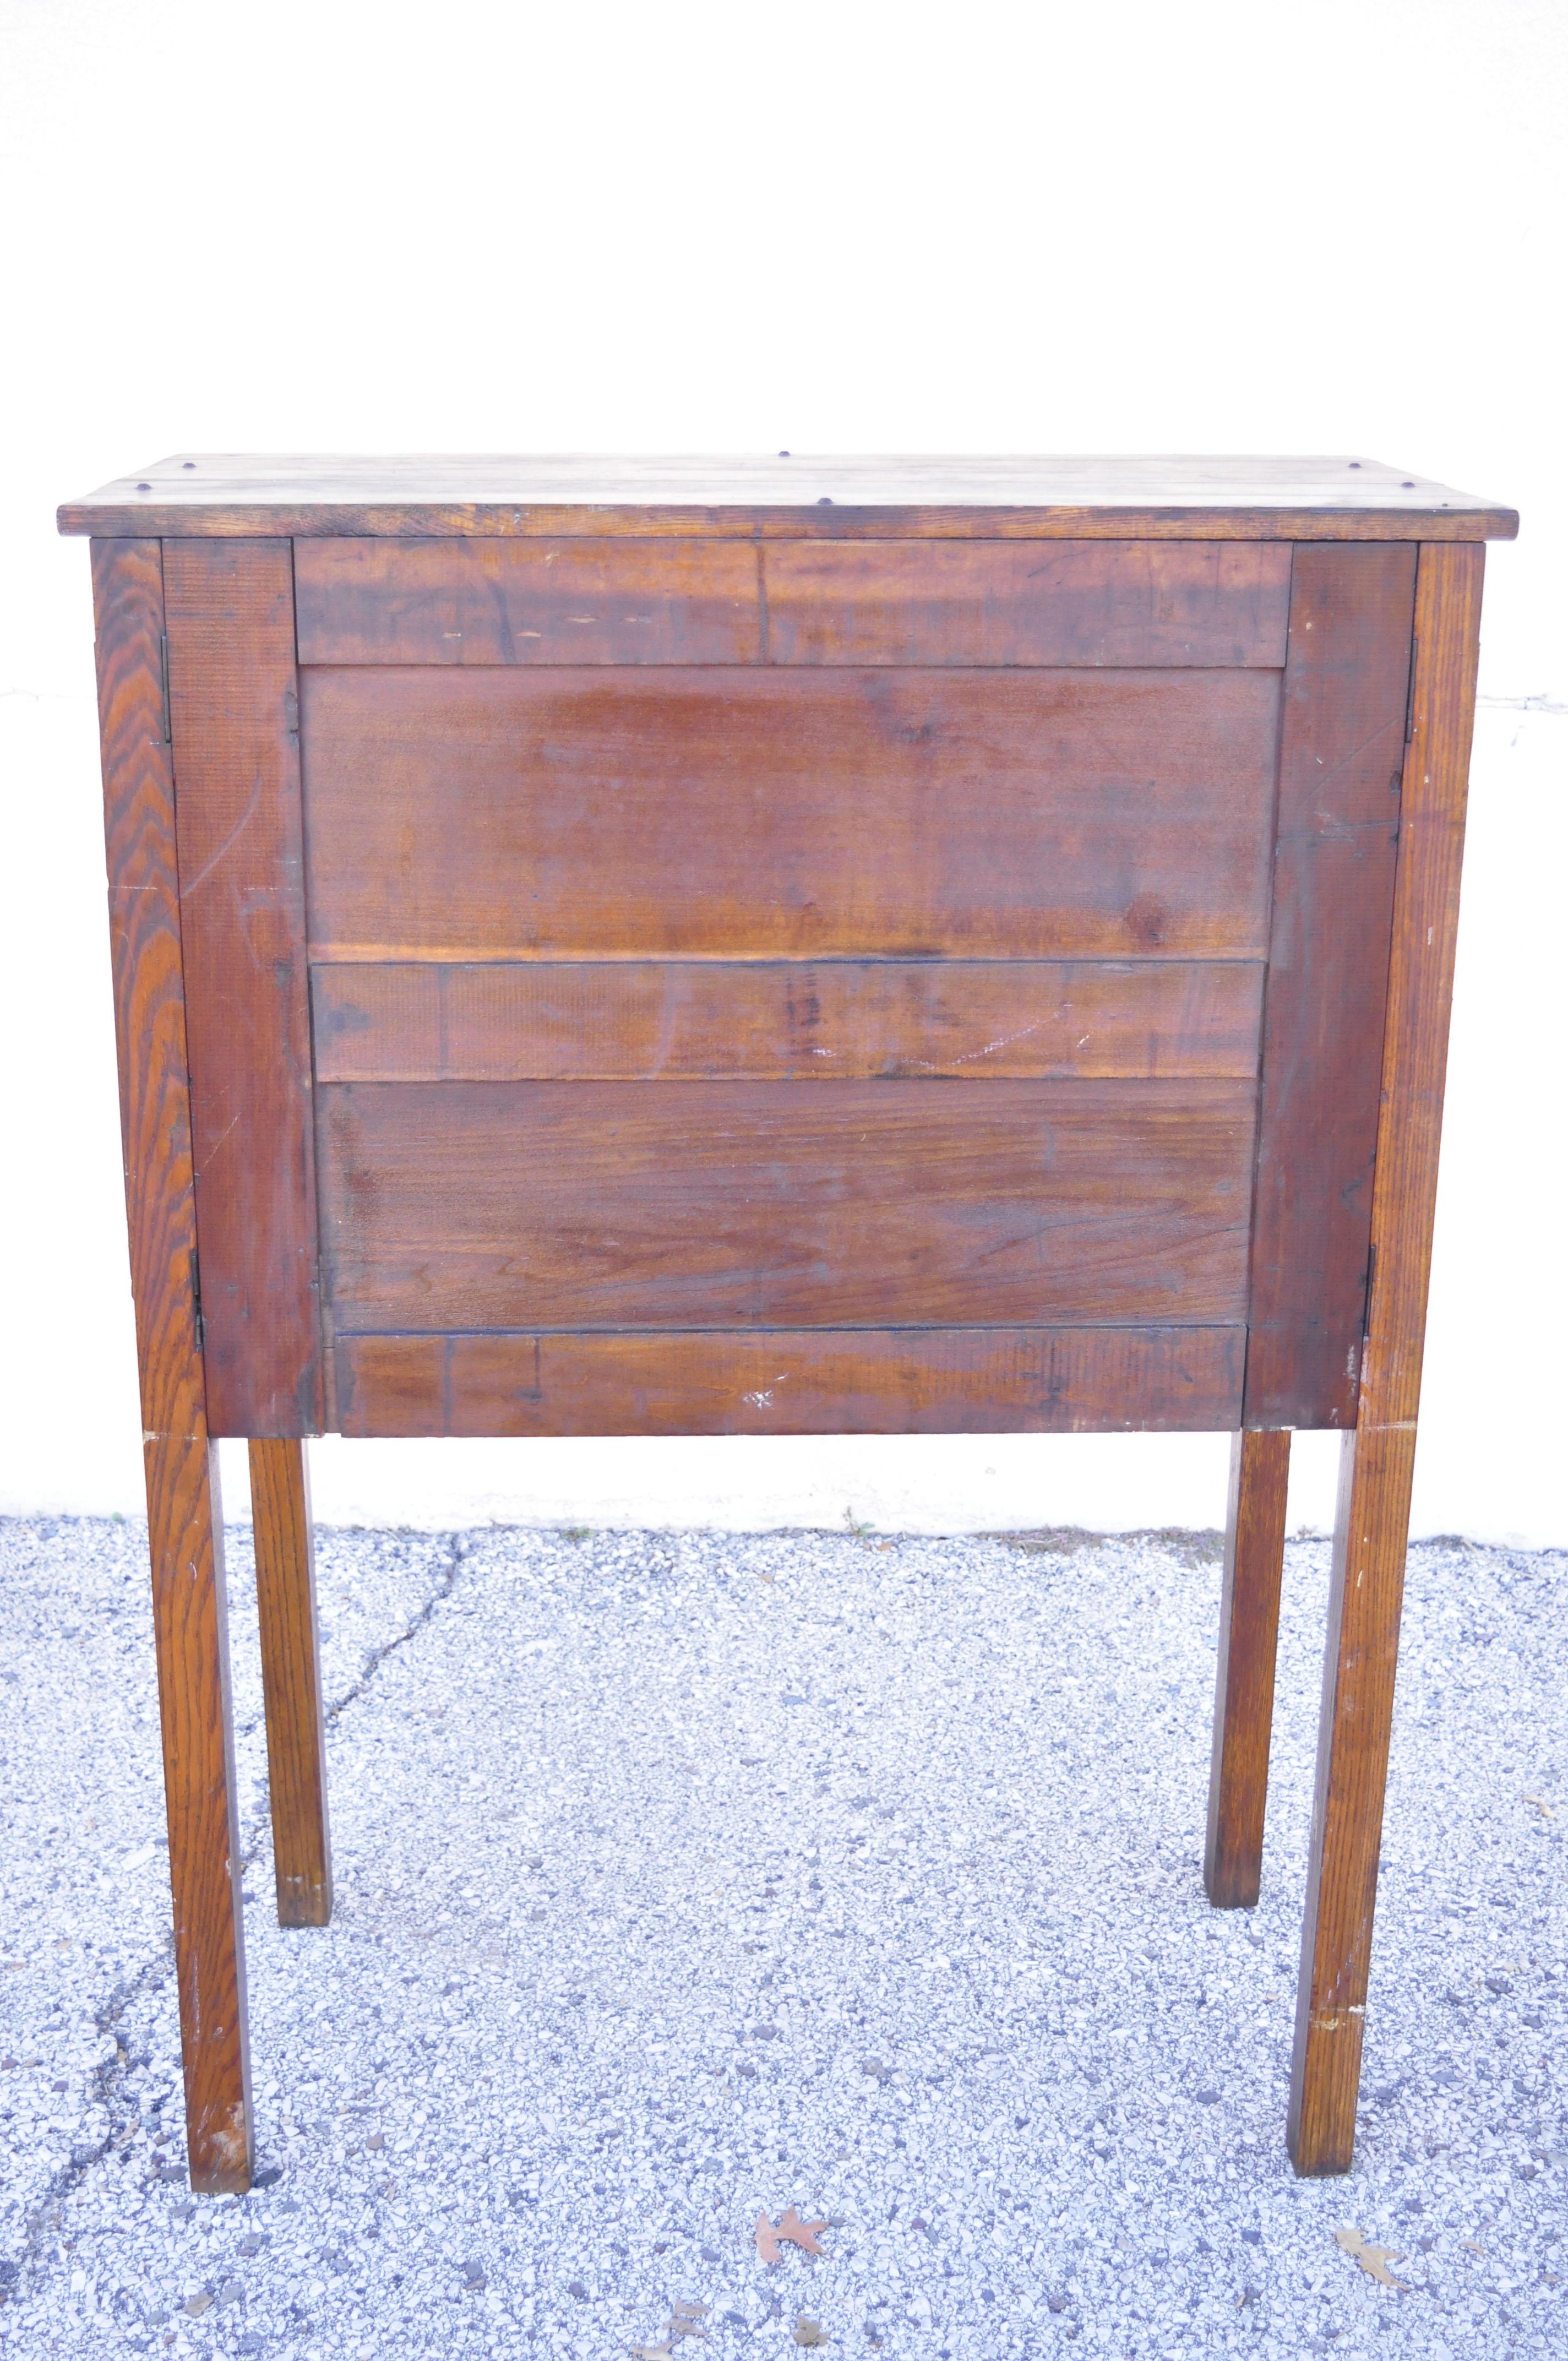 Antique Arts & Crafts Mission Oak Wood Pie Safe Kitchen Cupboard Cabinet on Legs 2